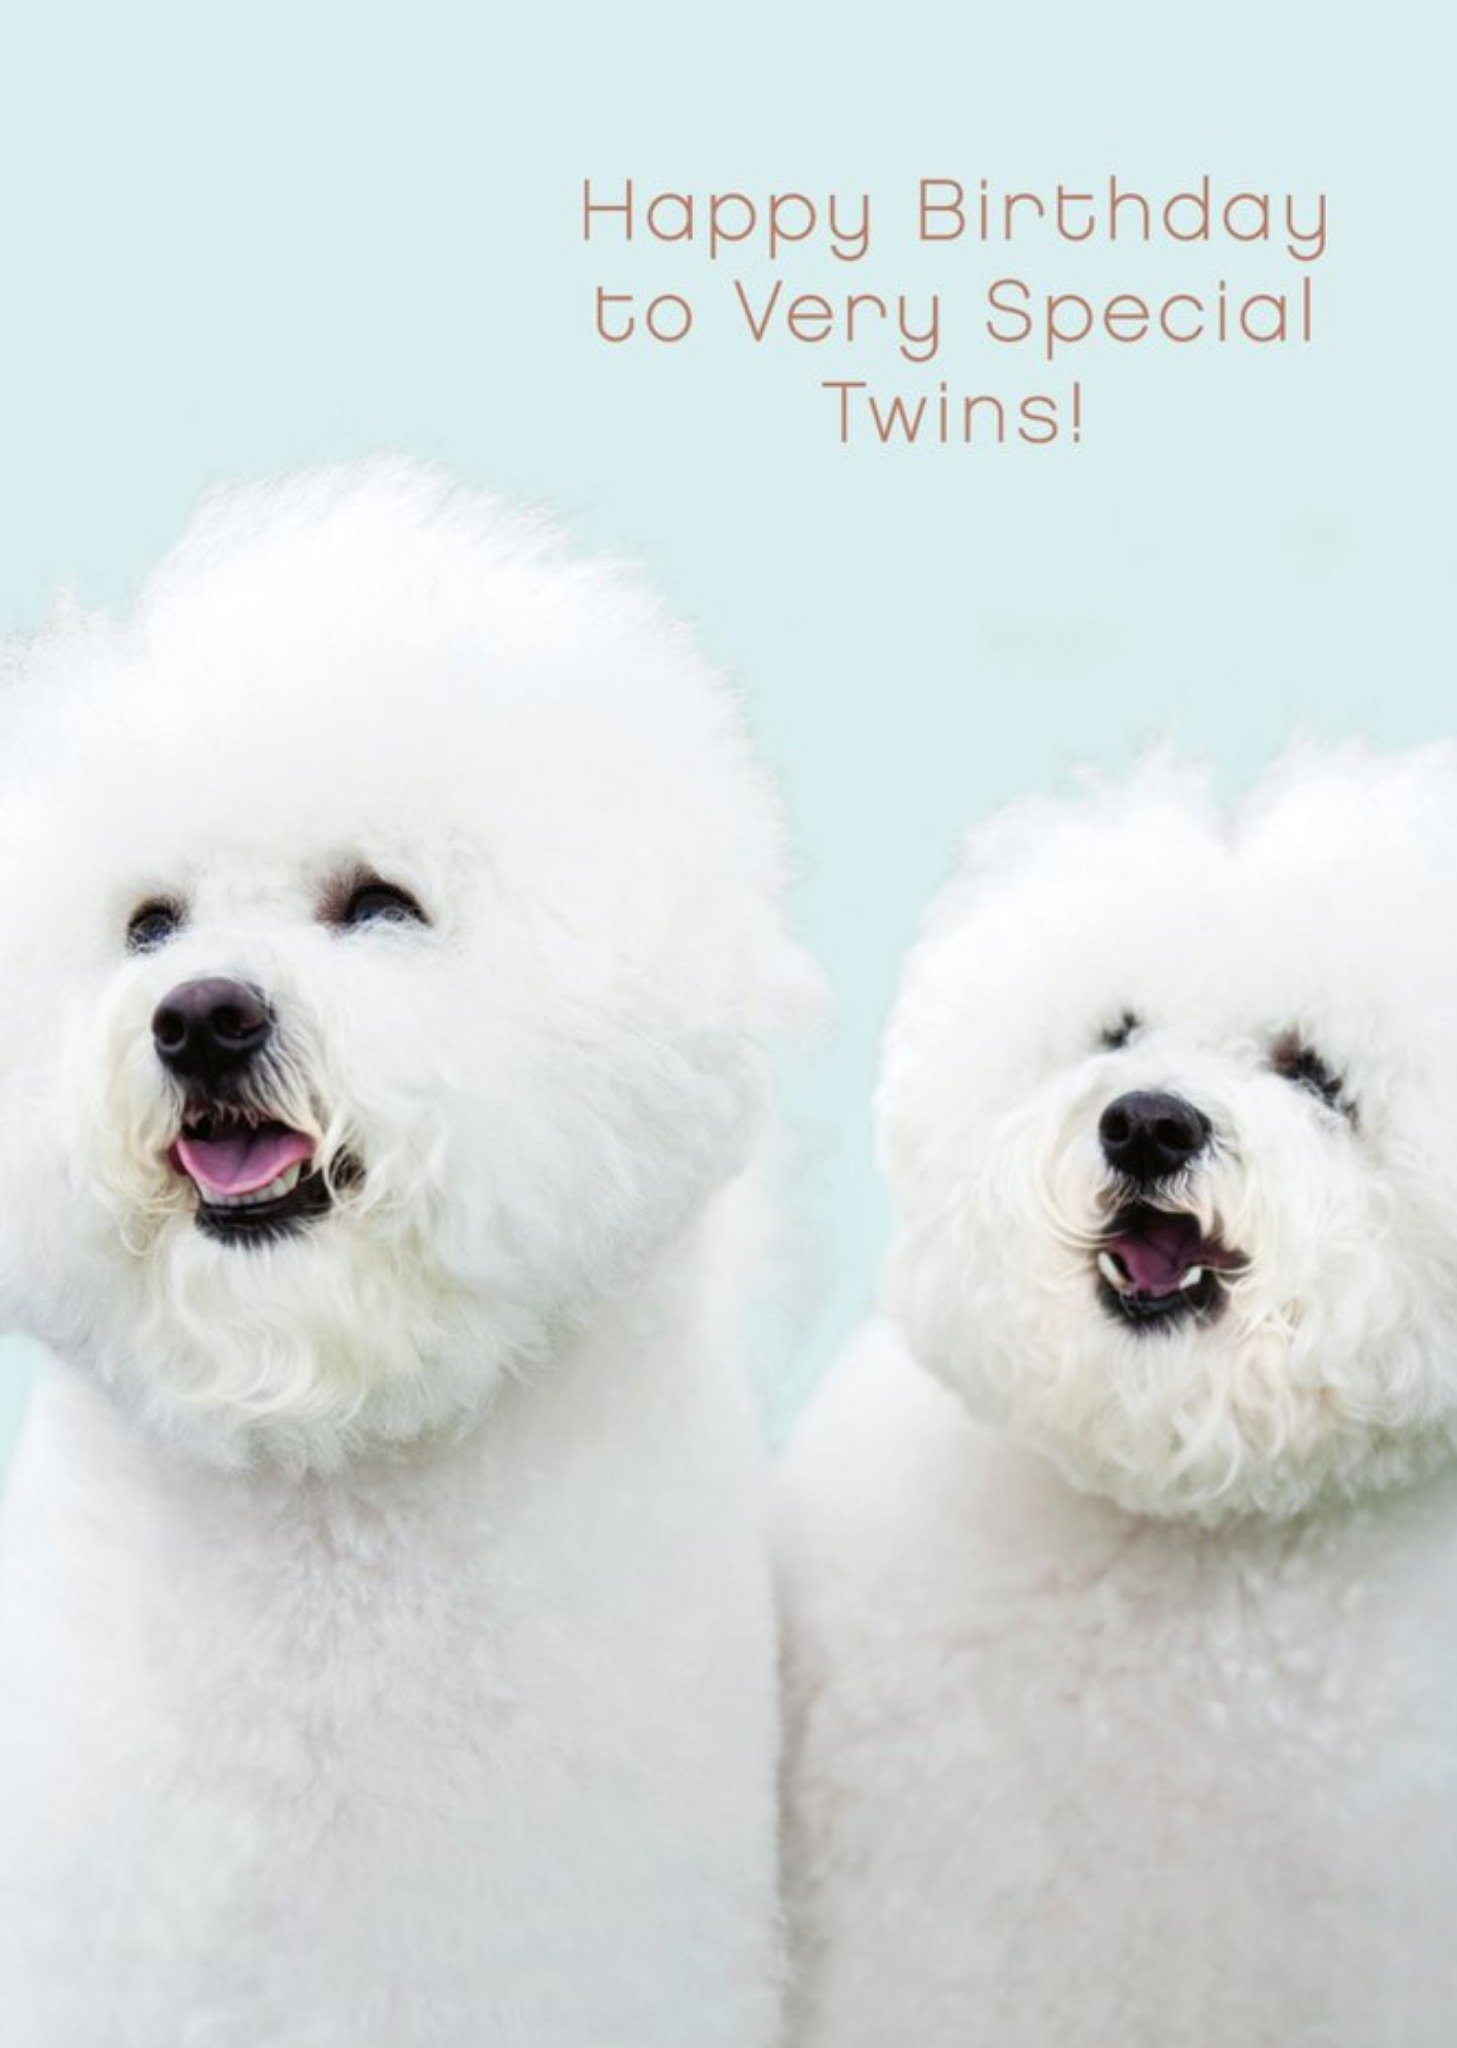 Moonpig Uk Greetings Carlton Cards Dogs Cute Special Twins Birthday Card Ecard